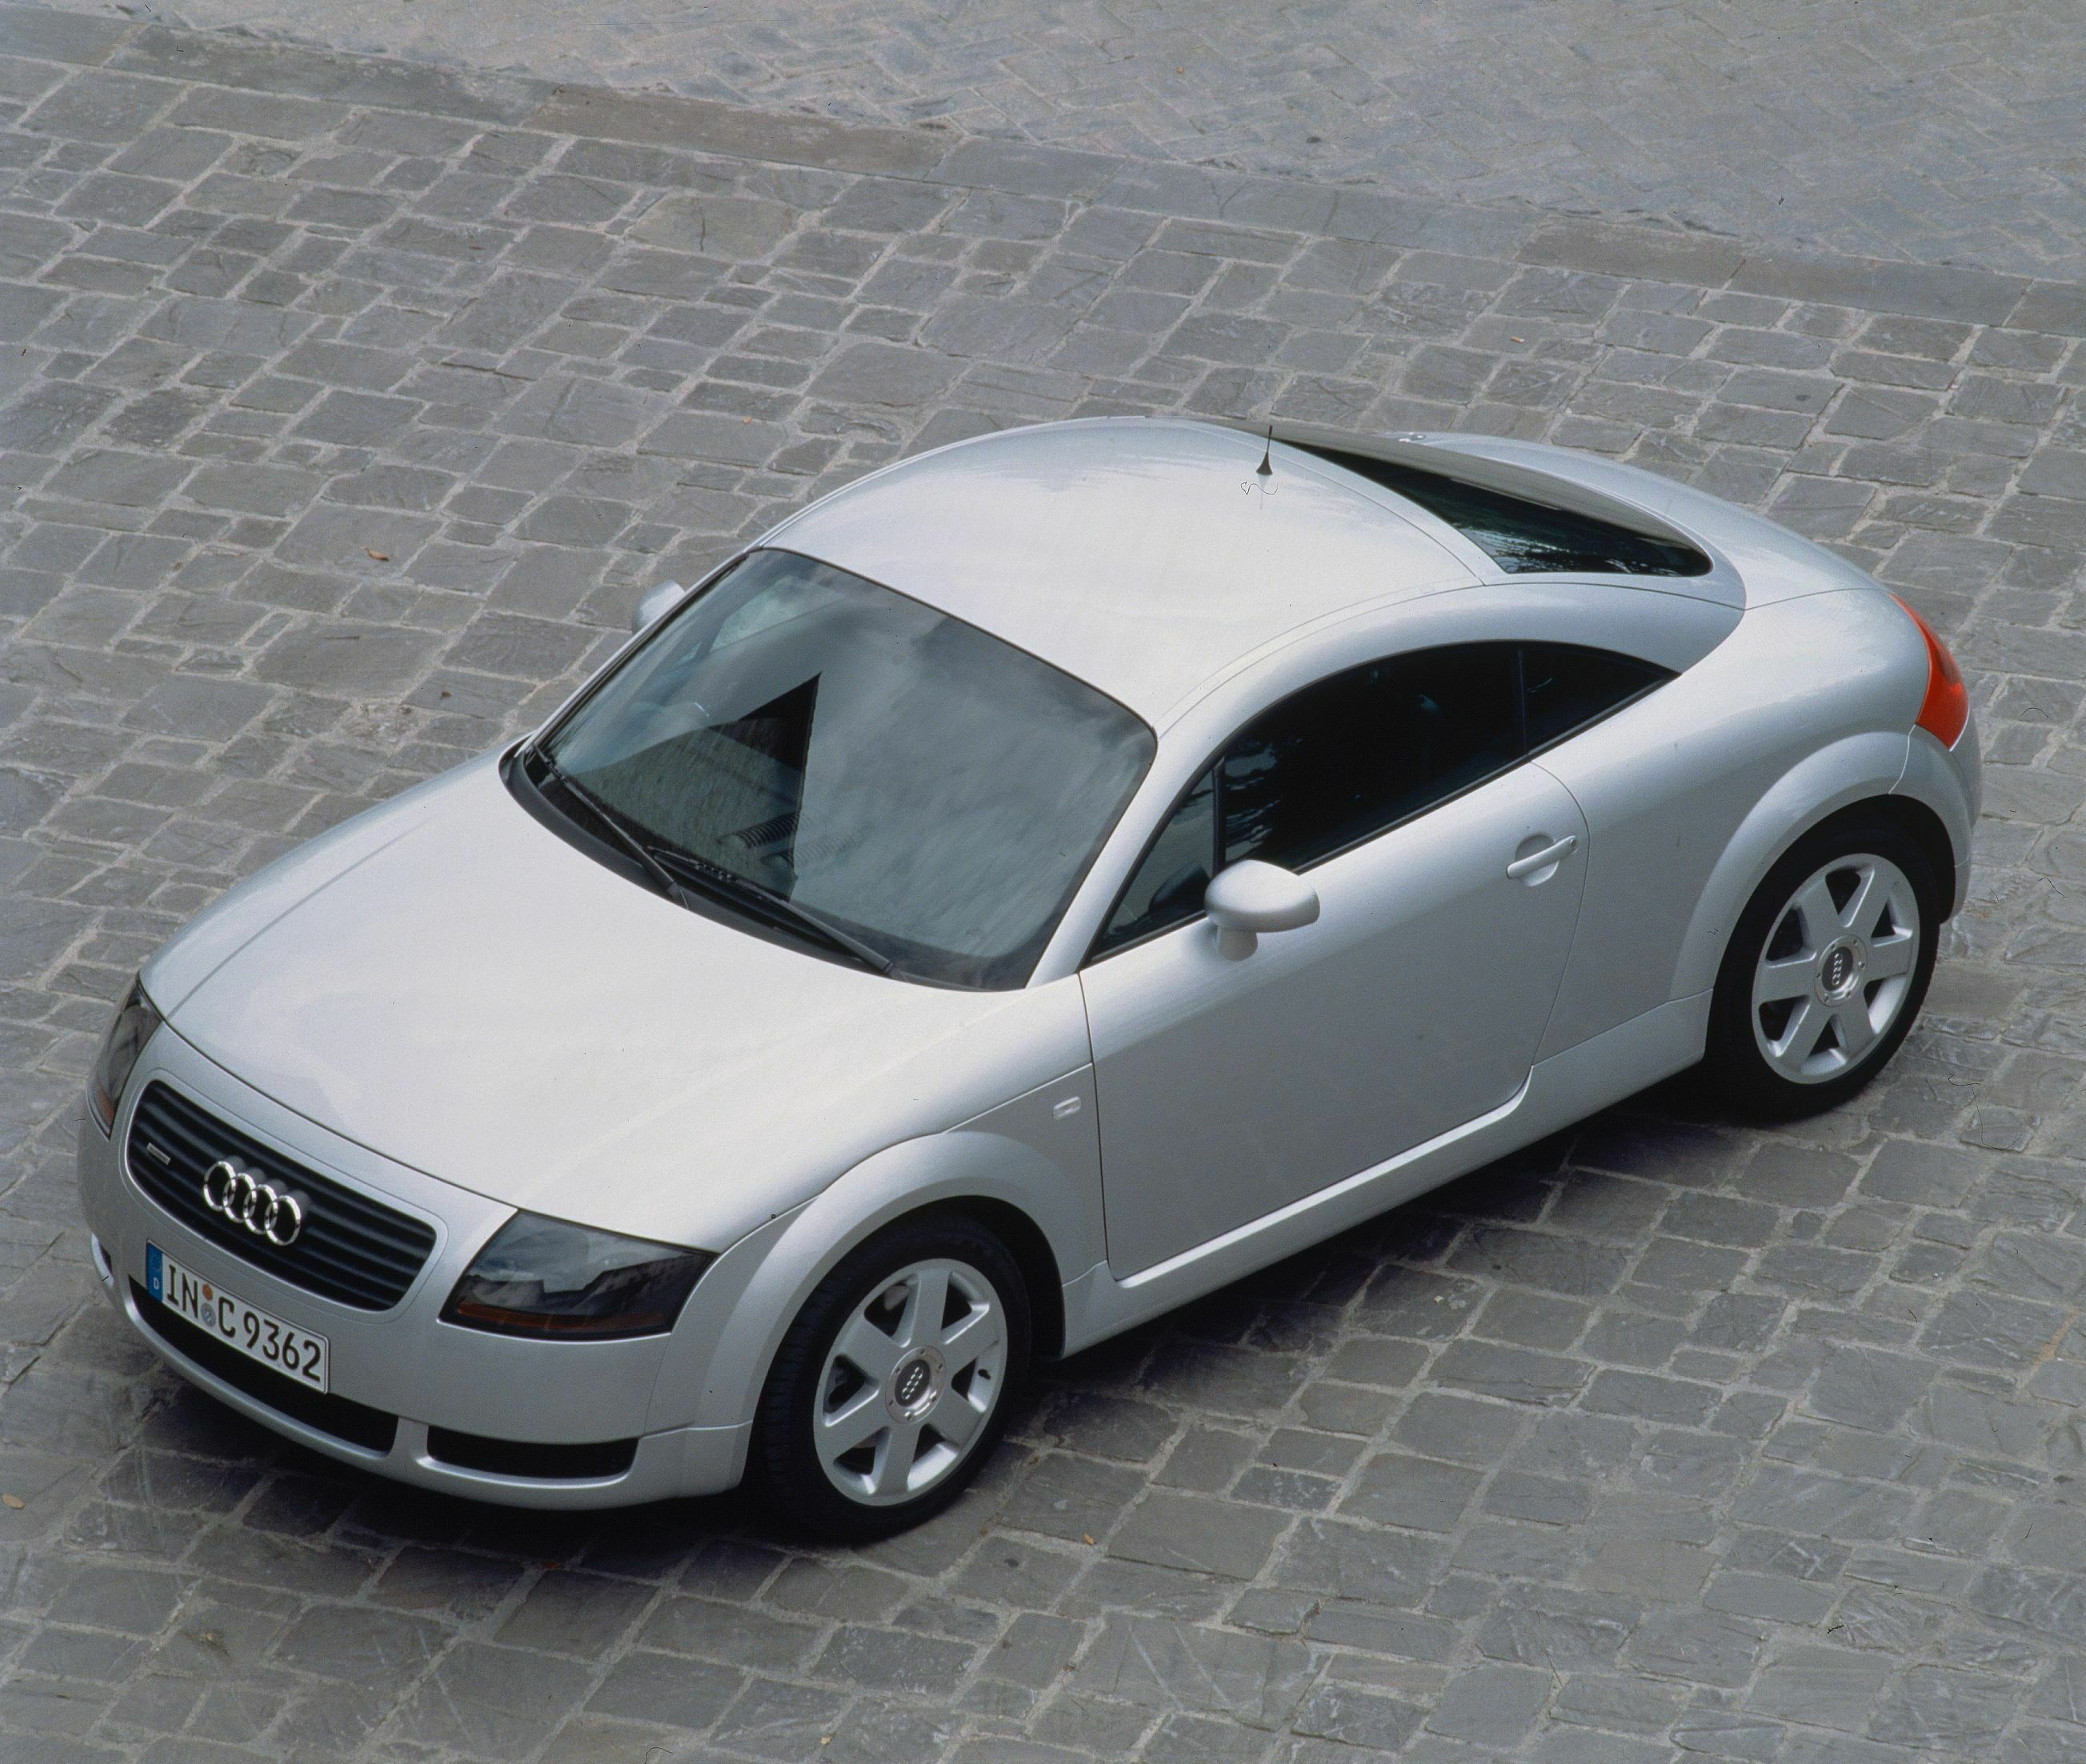 File:Audi TT Coupé (8J) rear 20100725.jpg - Wikipedia